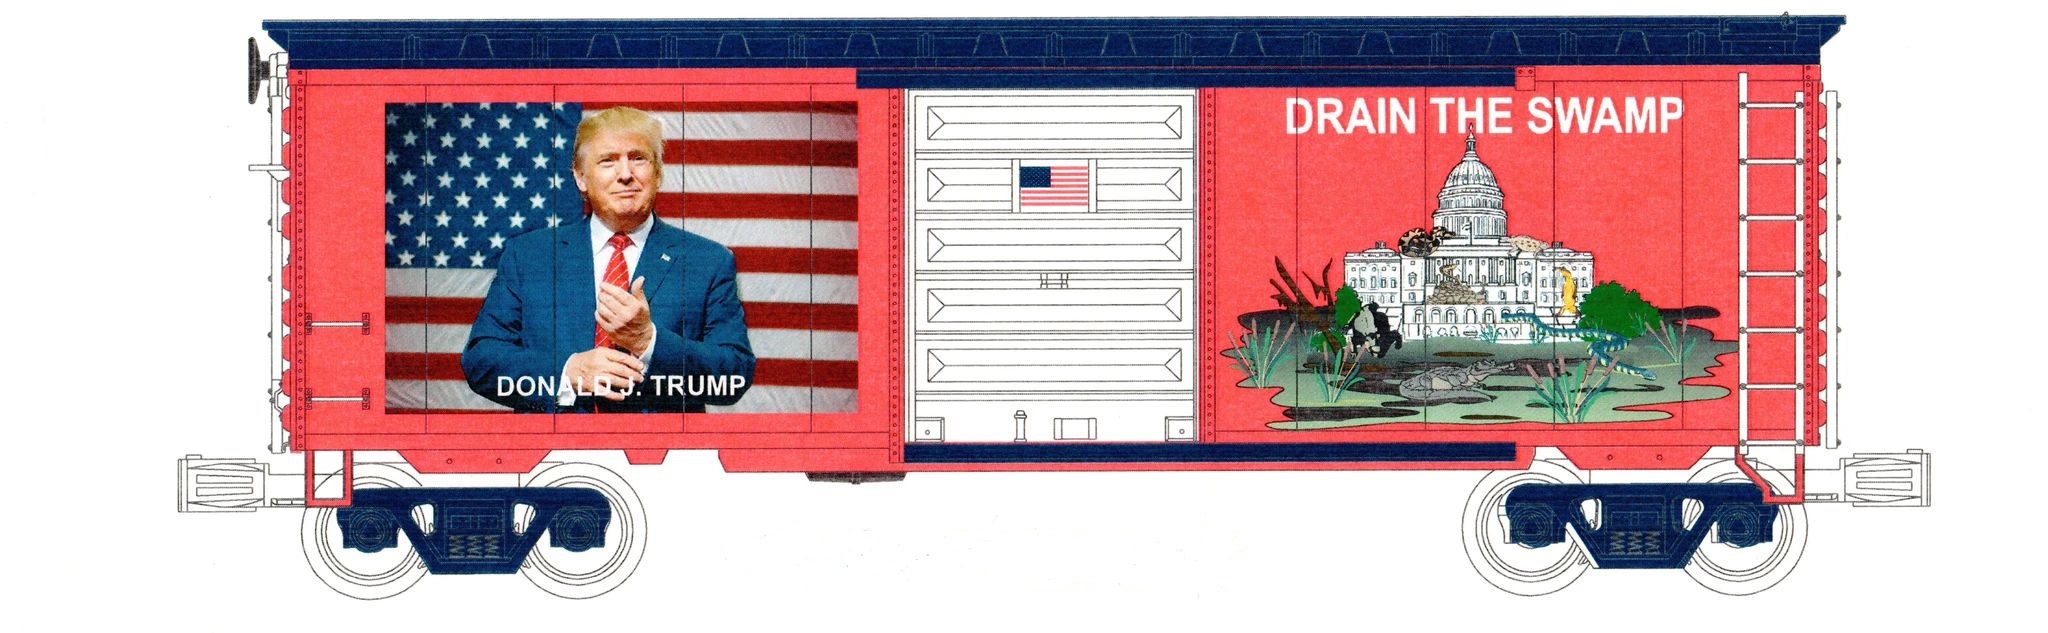 Donald J. Trump (Drain the Swamp) Box Car image